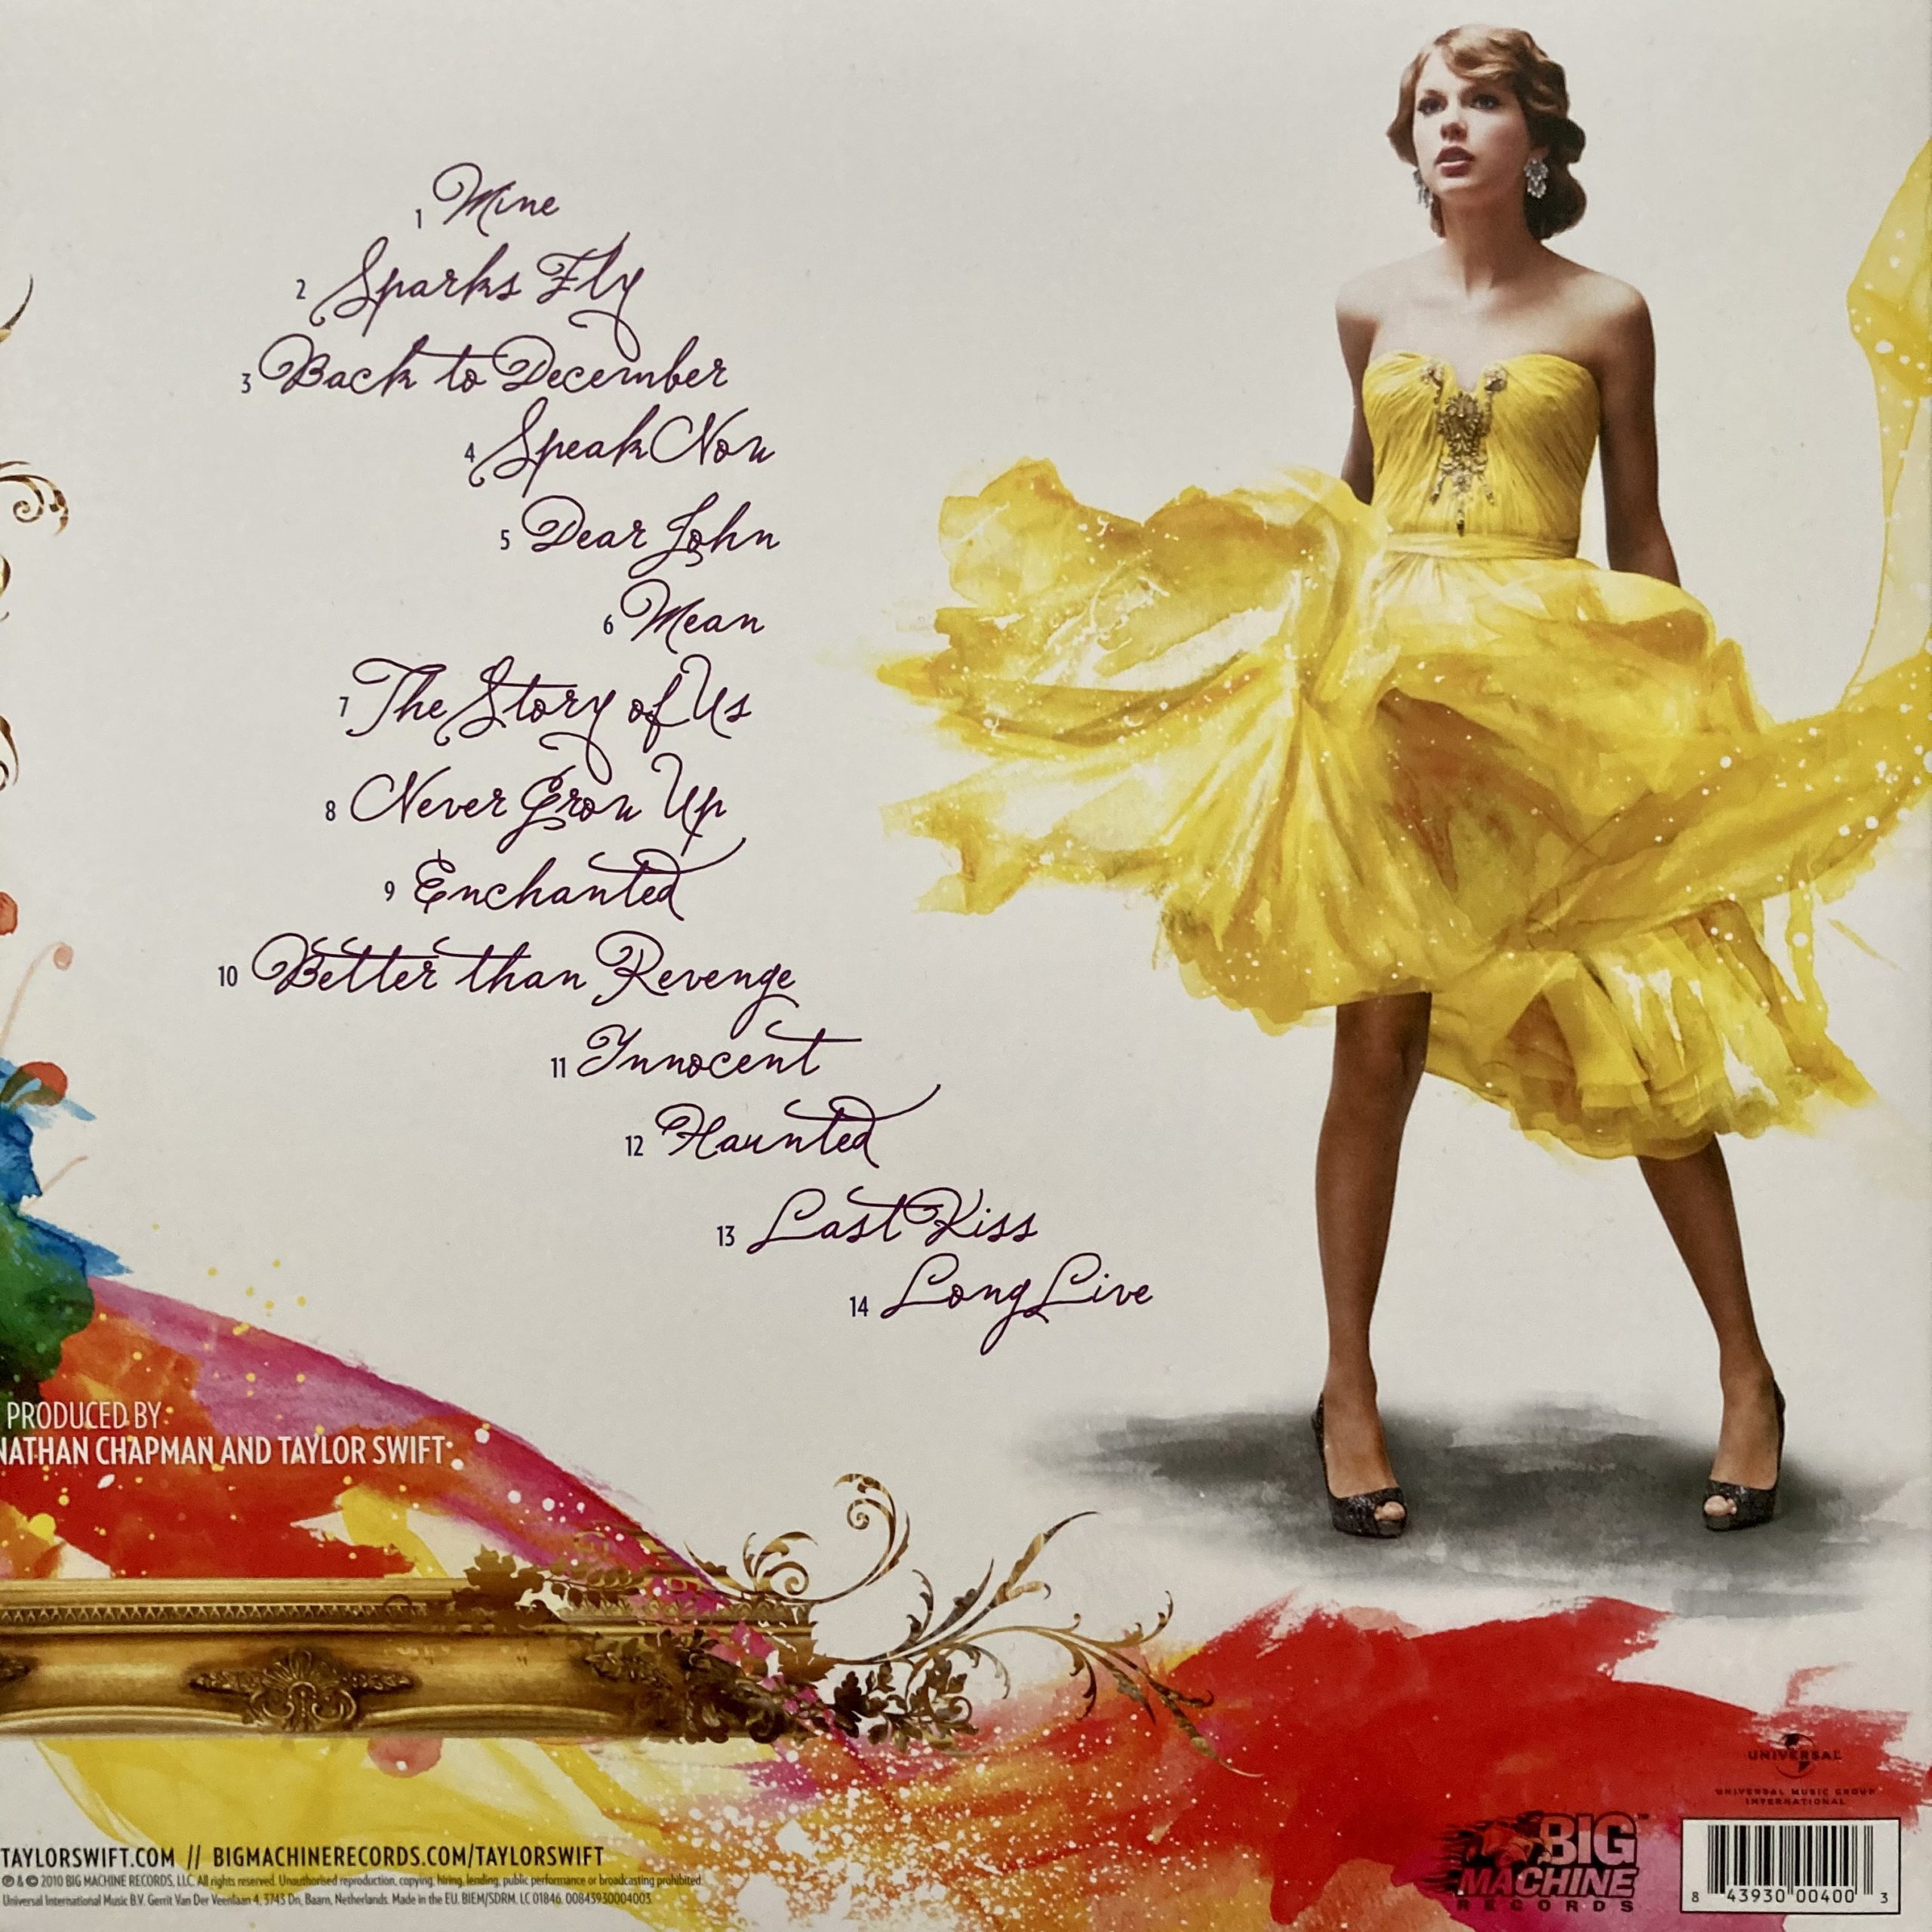 La corresponsal adolescente”Taylor Swift - Speak now - 2010 - VinylRoute